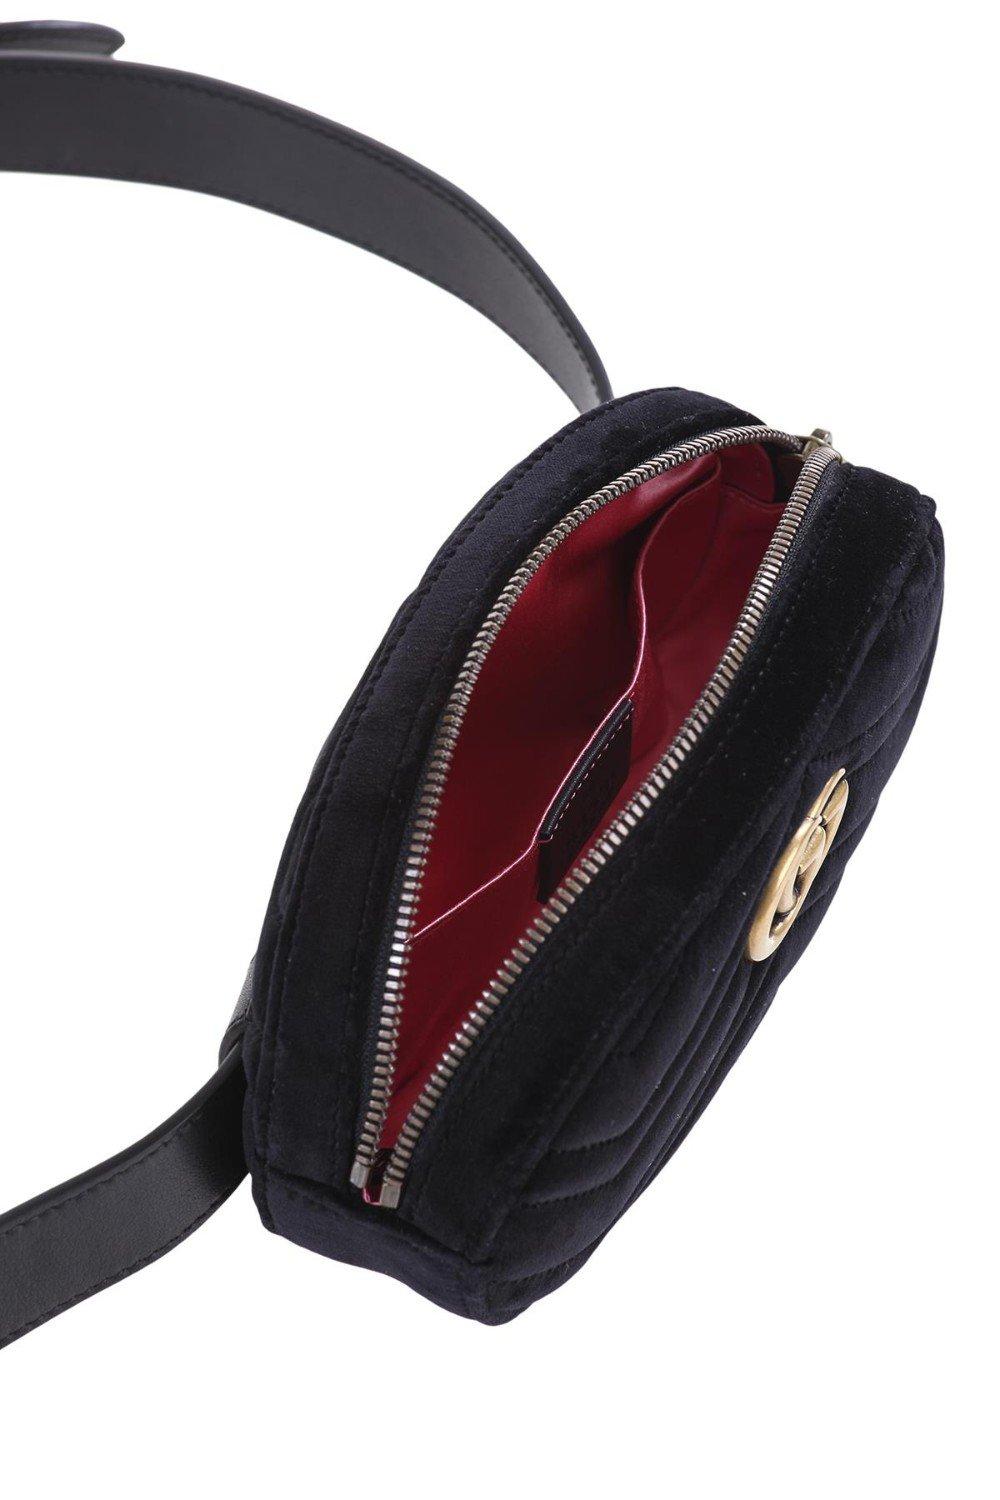 Gucci Velvet Marmont Belt Bag With Chevron Pattern in Black - Lyst